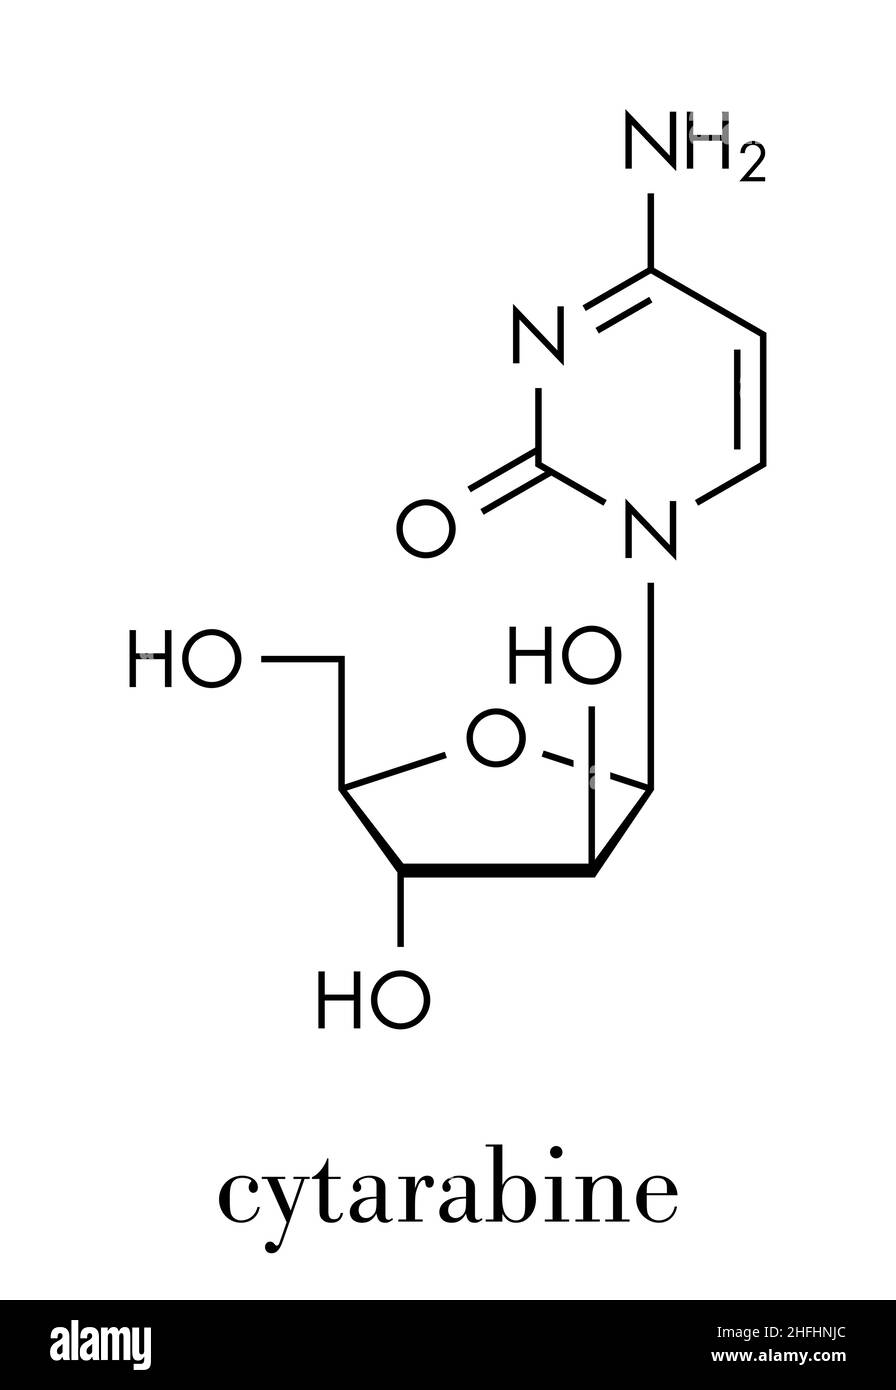 Cytarabine (cytosine arabinoside, Ara-C) chemotherapy drug molecule. Used in treatment of acute myeloid leukemia (AML), acute lymphocytic leukemia (AL Stock Vector